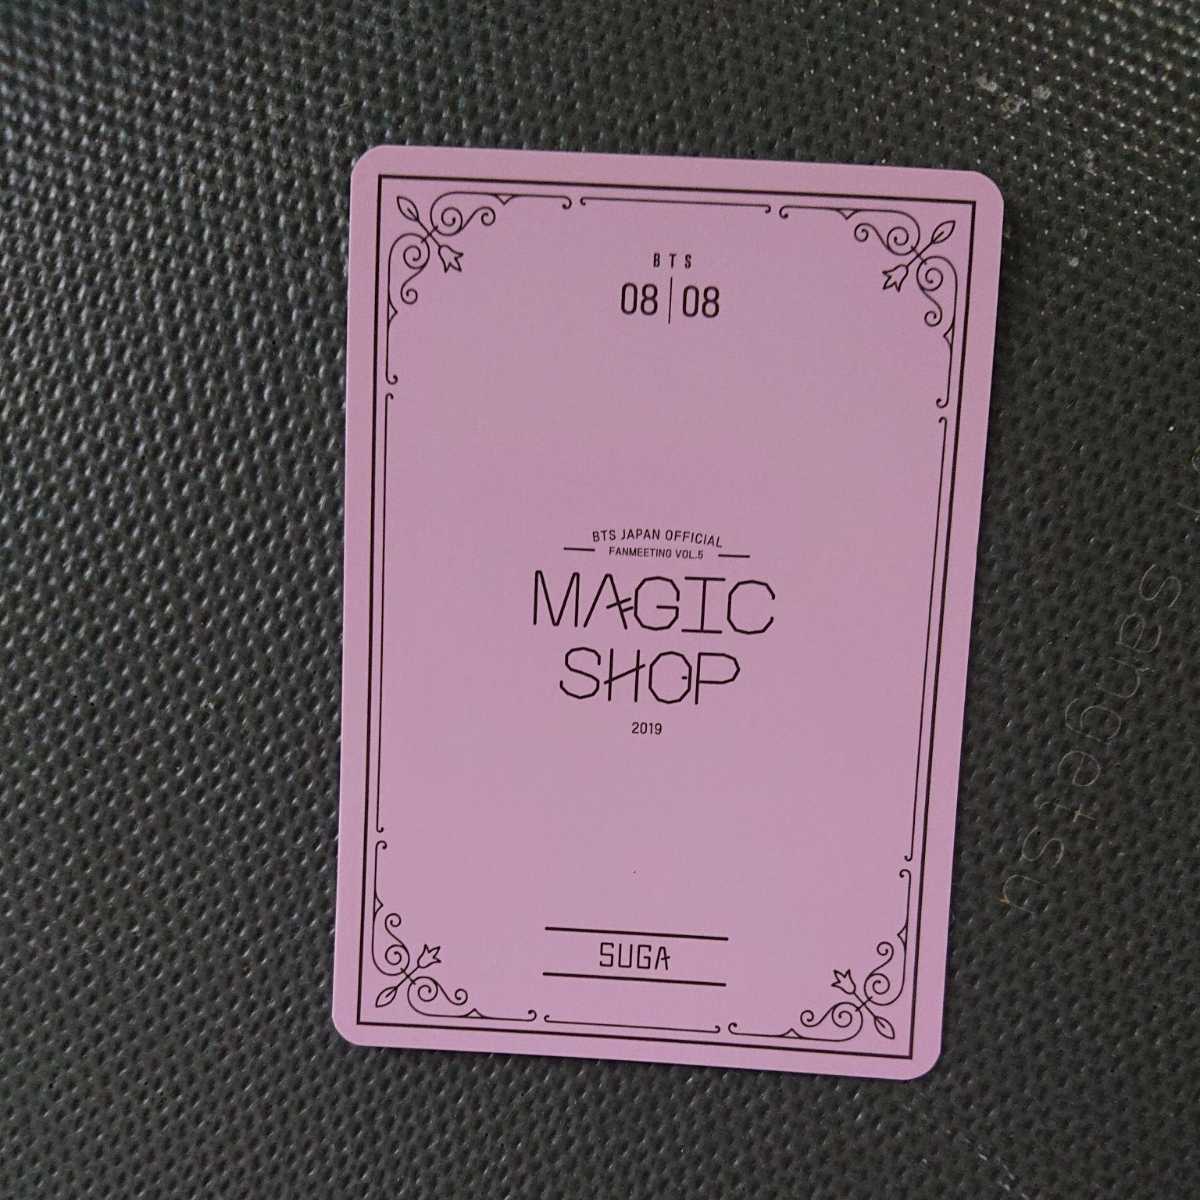 8 BTS bulletproof boy . trading card photo card Mini photo yungiSUGA MAGIC SHOP Magic shop japan